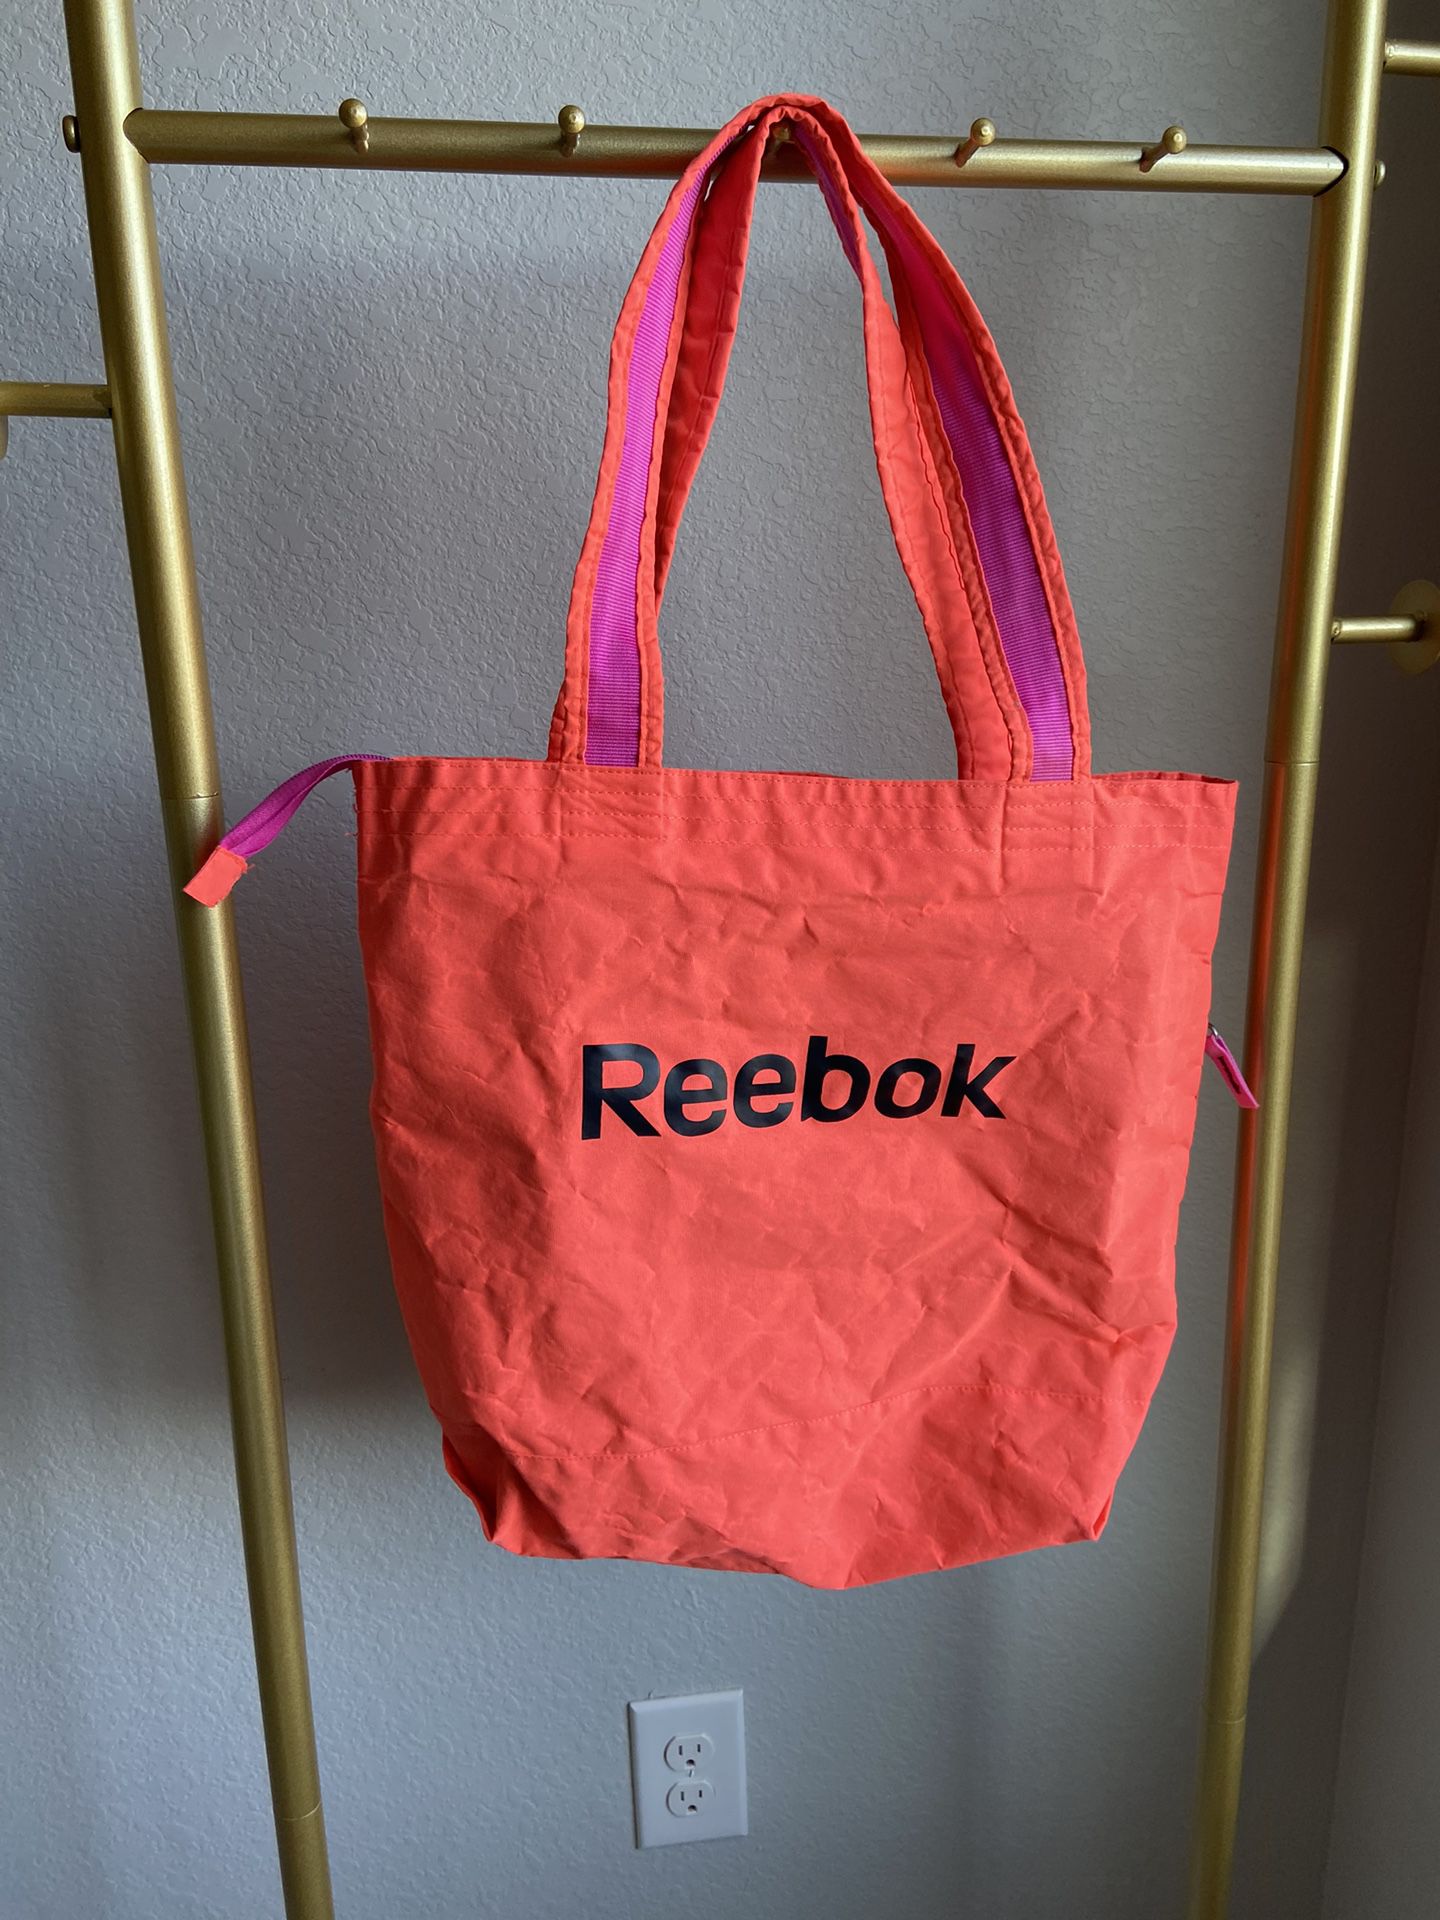 Reebok Tote Bag 